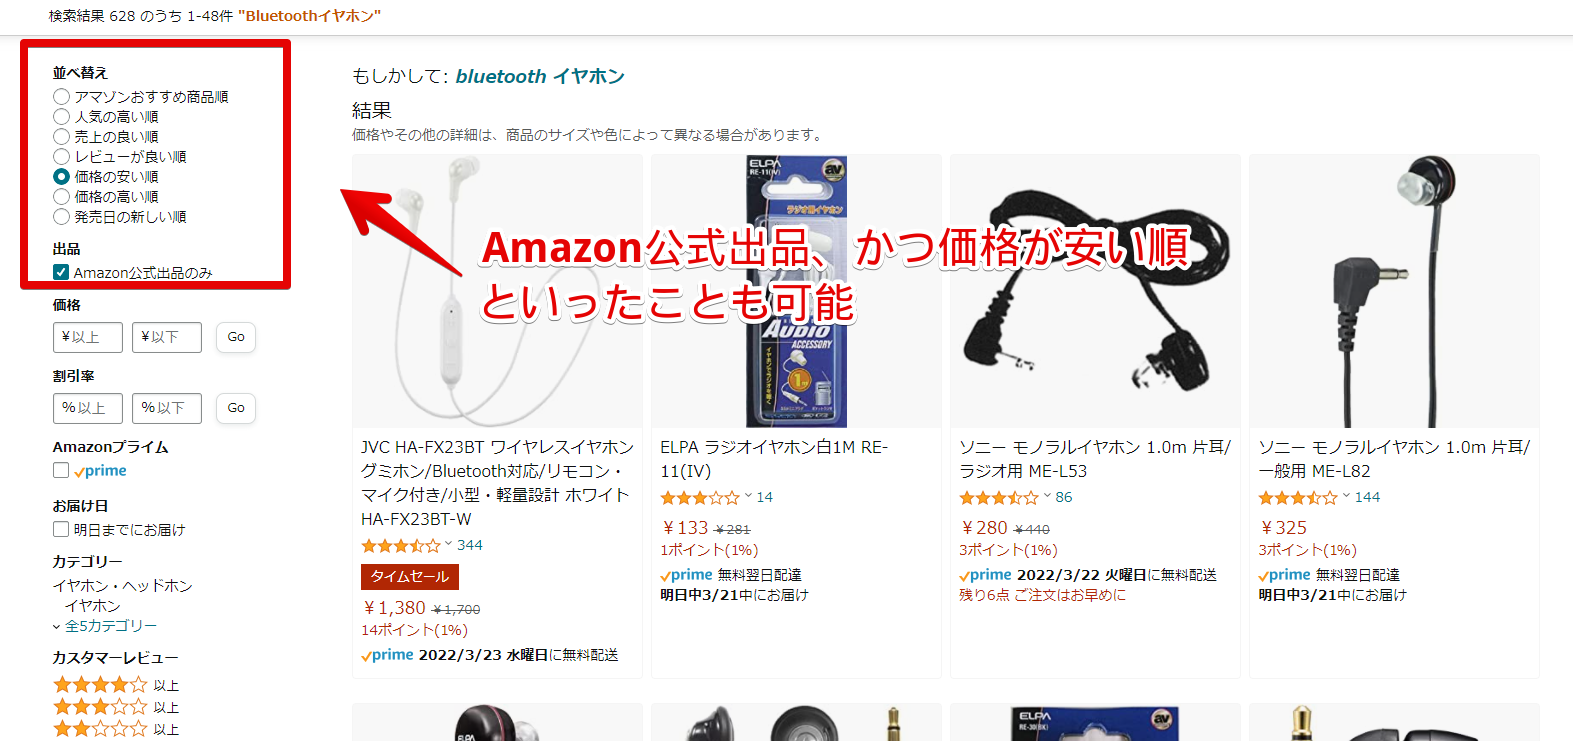 Amazon公式出品、かつ価格が安い順に並べ替えた画像